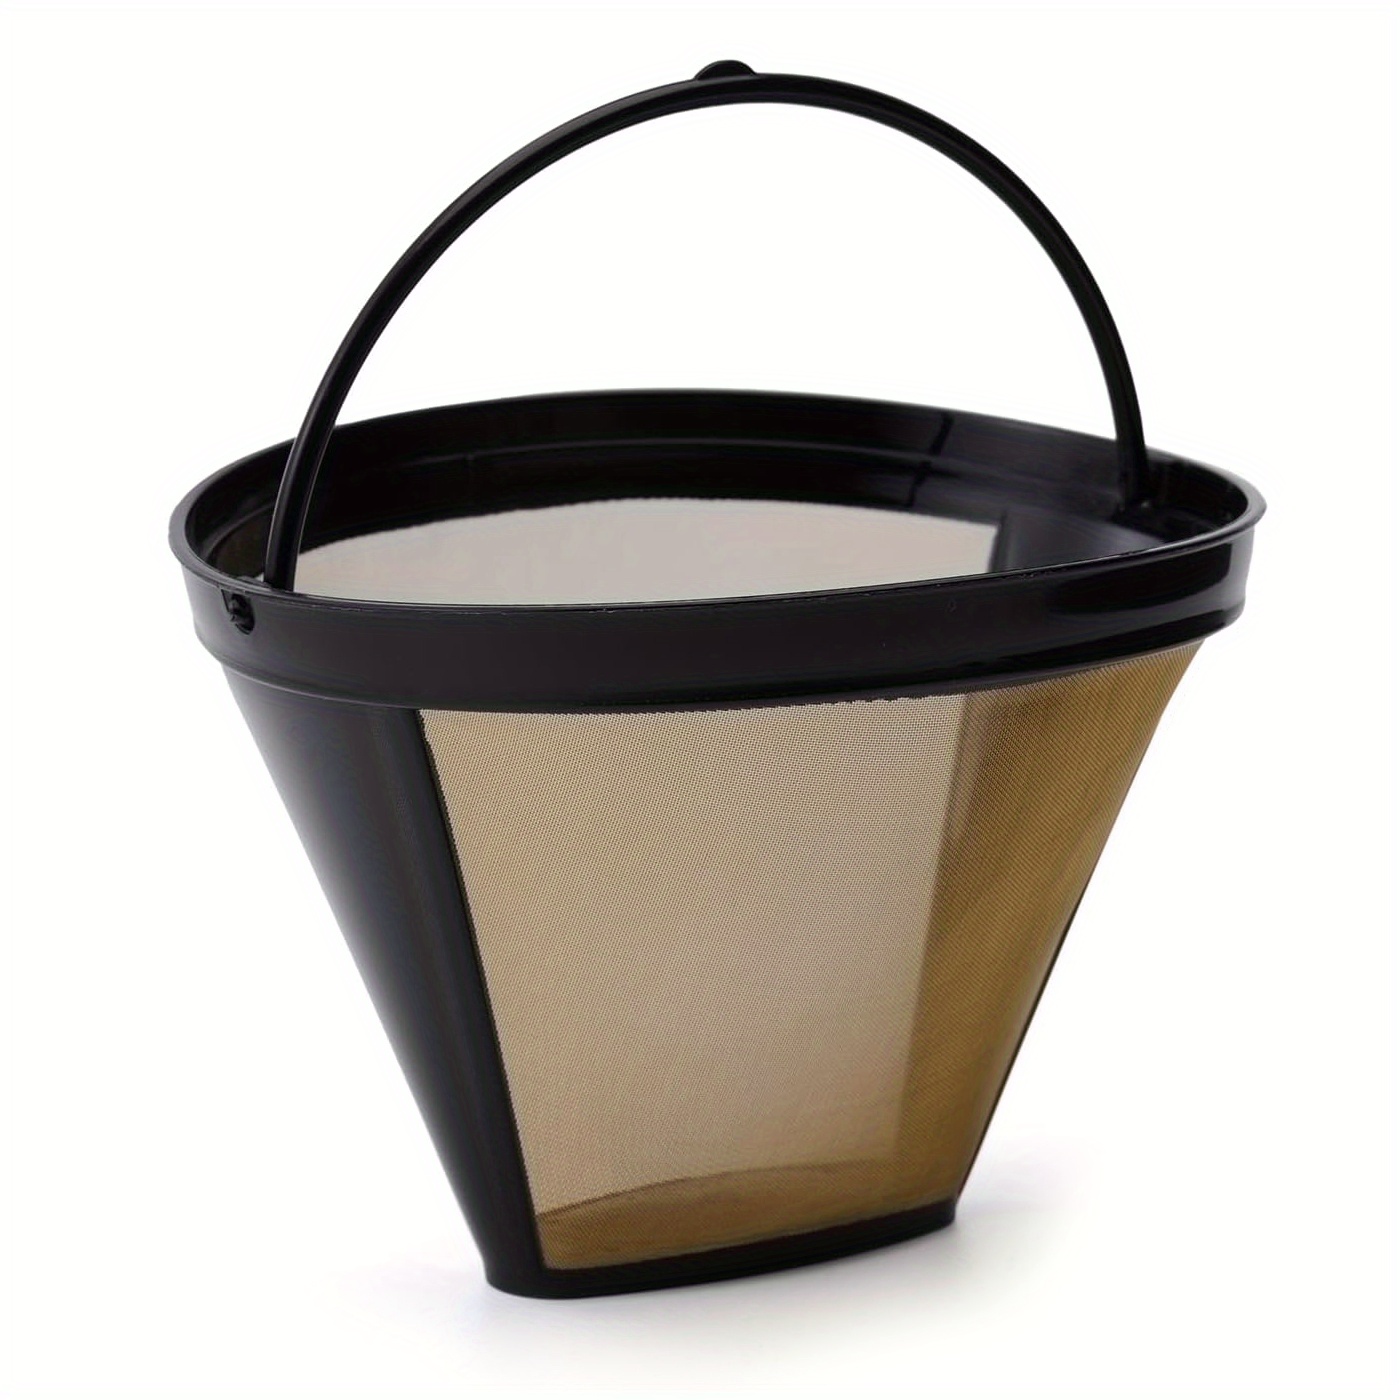 2pcs 4 cone Reusable Coffee Filter Basket for Ninja Dual Brew